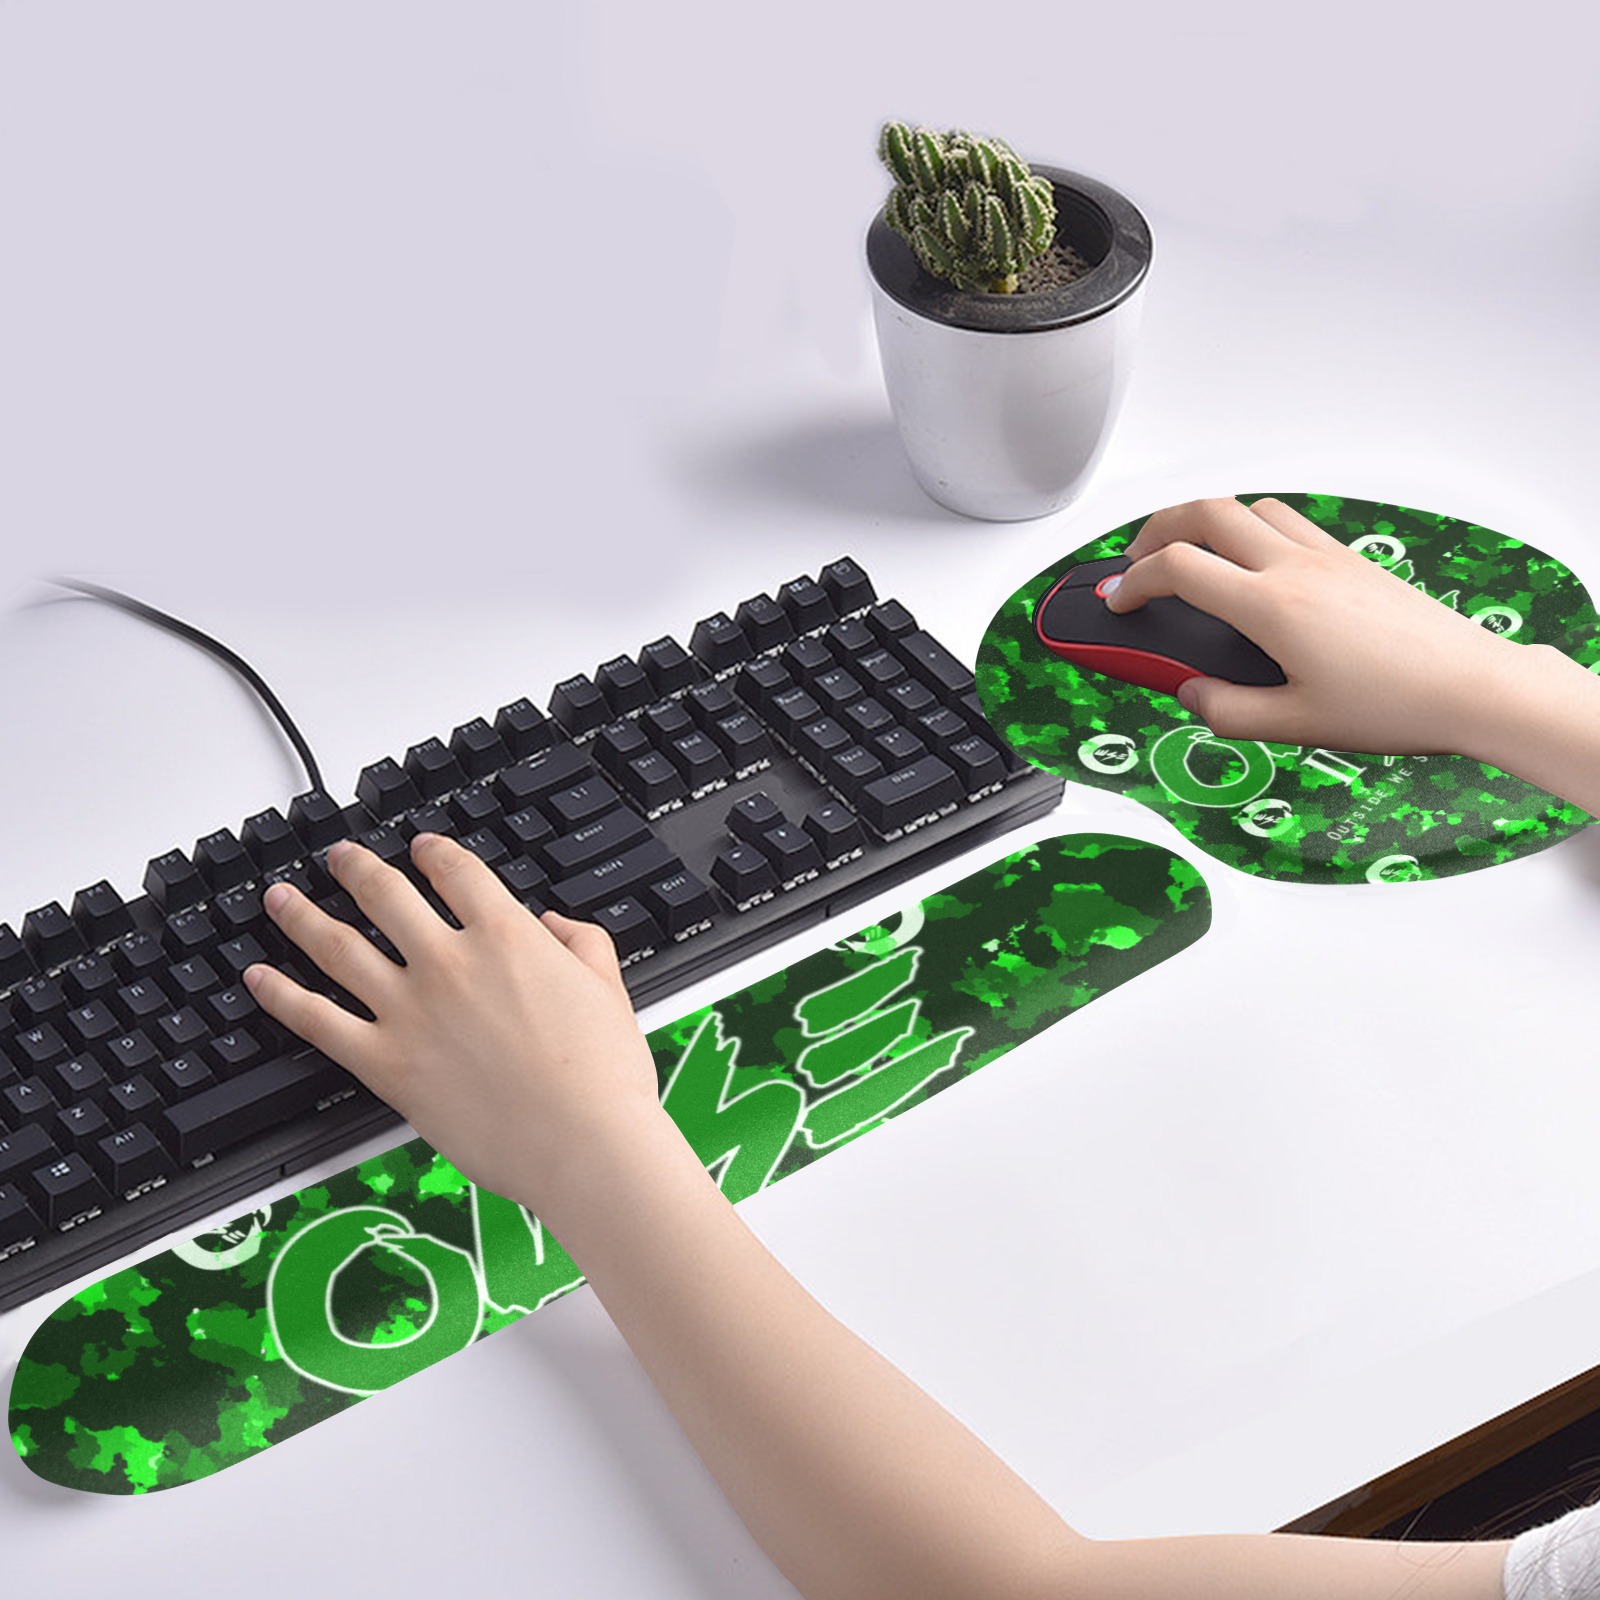 OGSGreenShirt4 Keyboard Mouse Pad Set with Wrist Rest Support